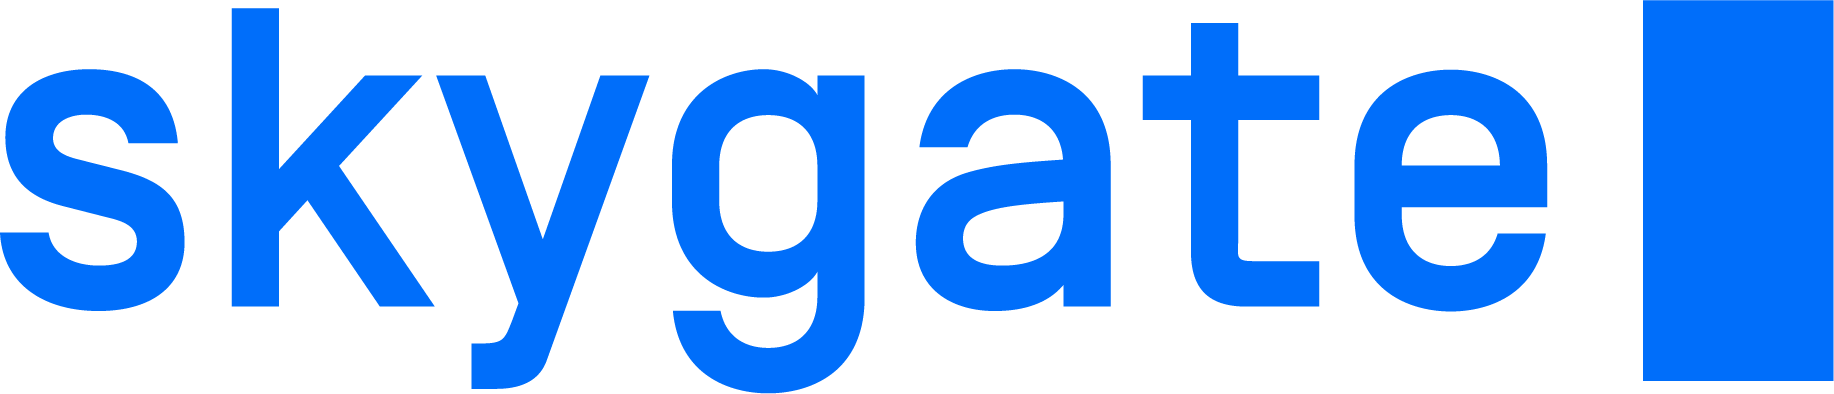 Skygate logo